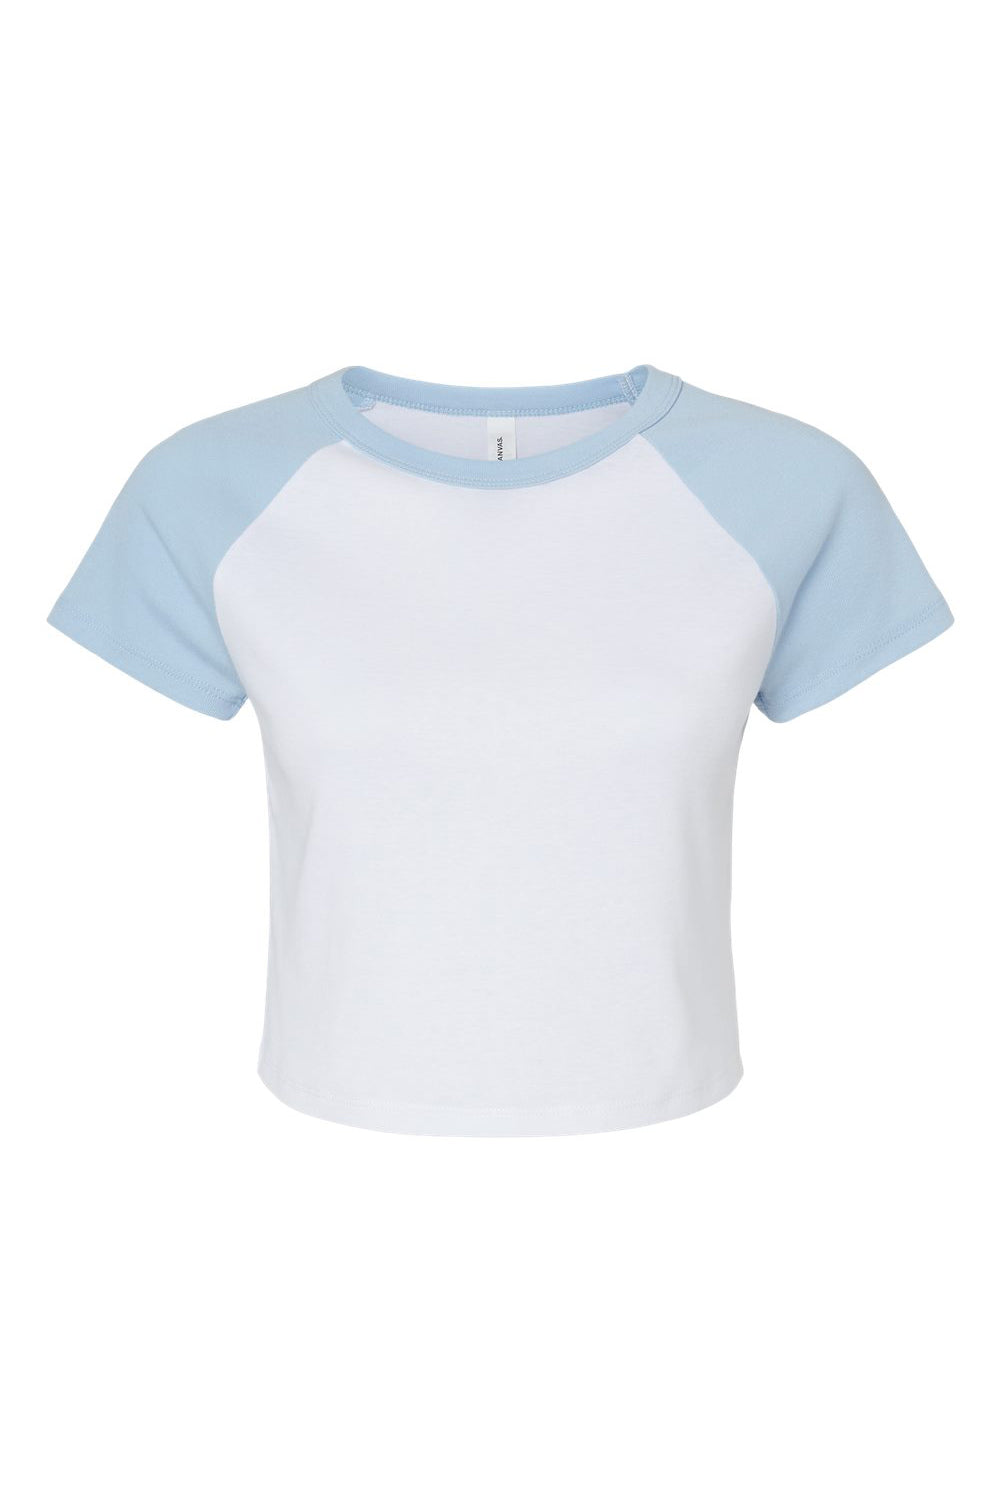 Bella + Canvas 1201 Womens Micro Ribbed Raglan Short Sleeve Crewneck Baby T-Shirt White/Baby Blue Flat Front